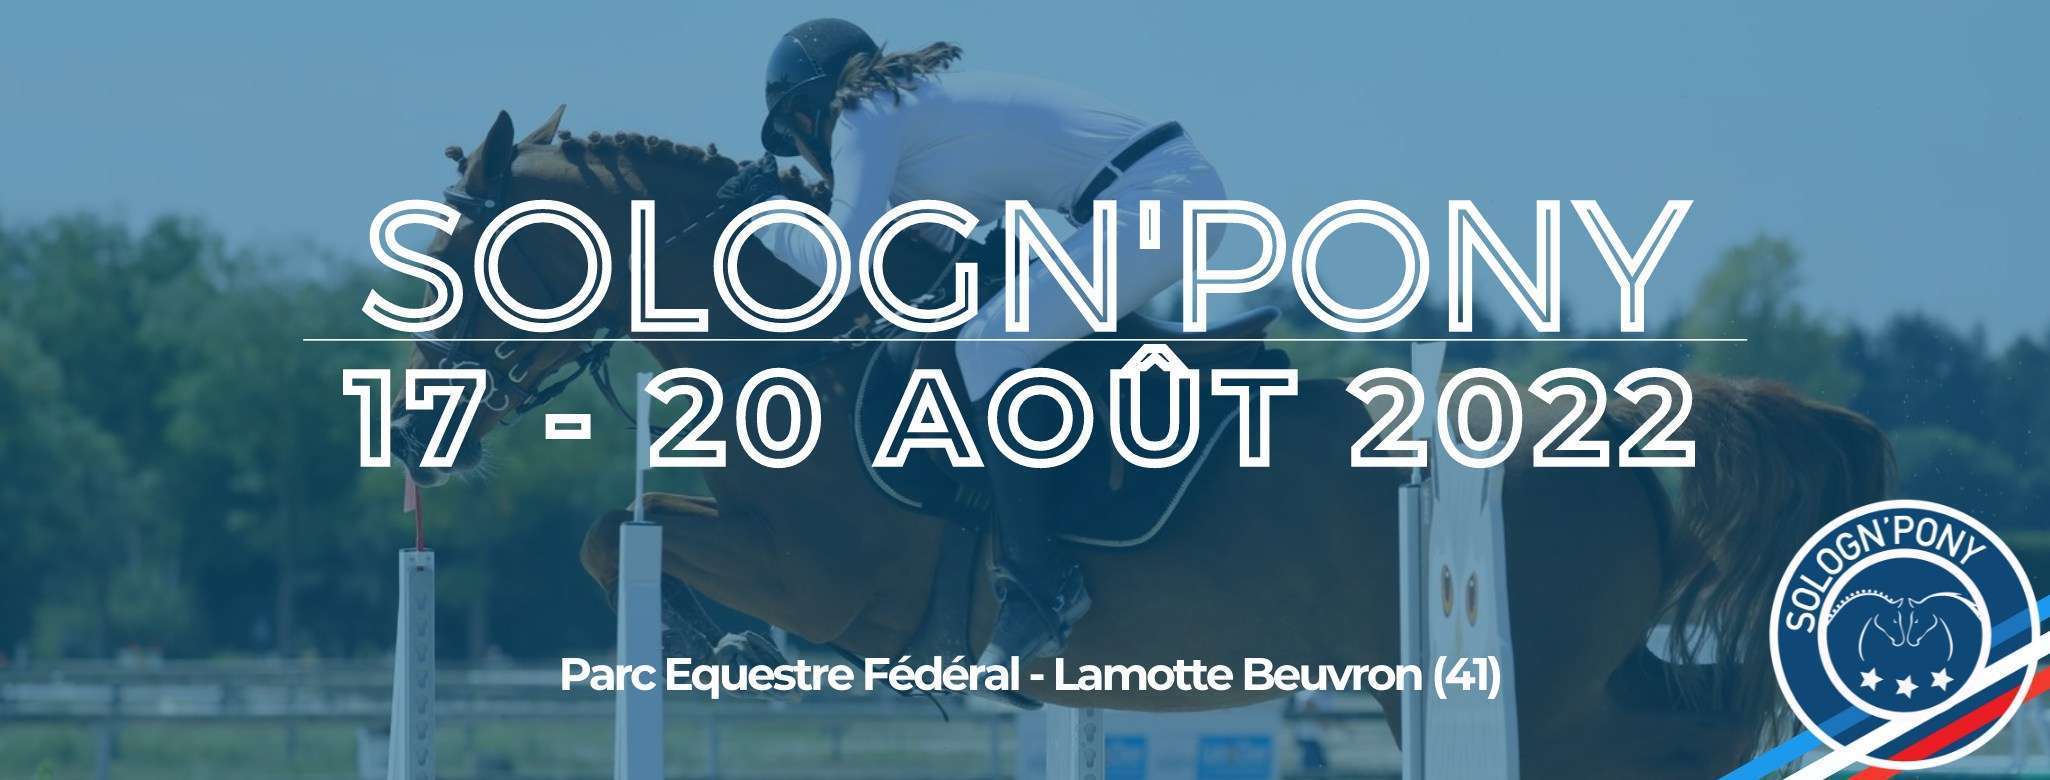 askara sera présent au sologn pony 2022 à lamotte-beuvron (41)